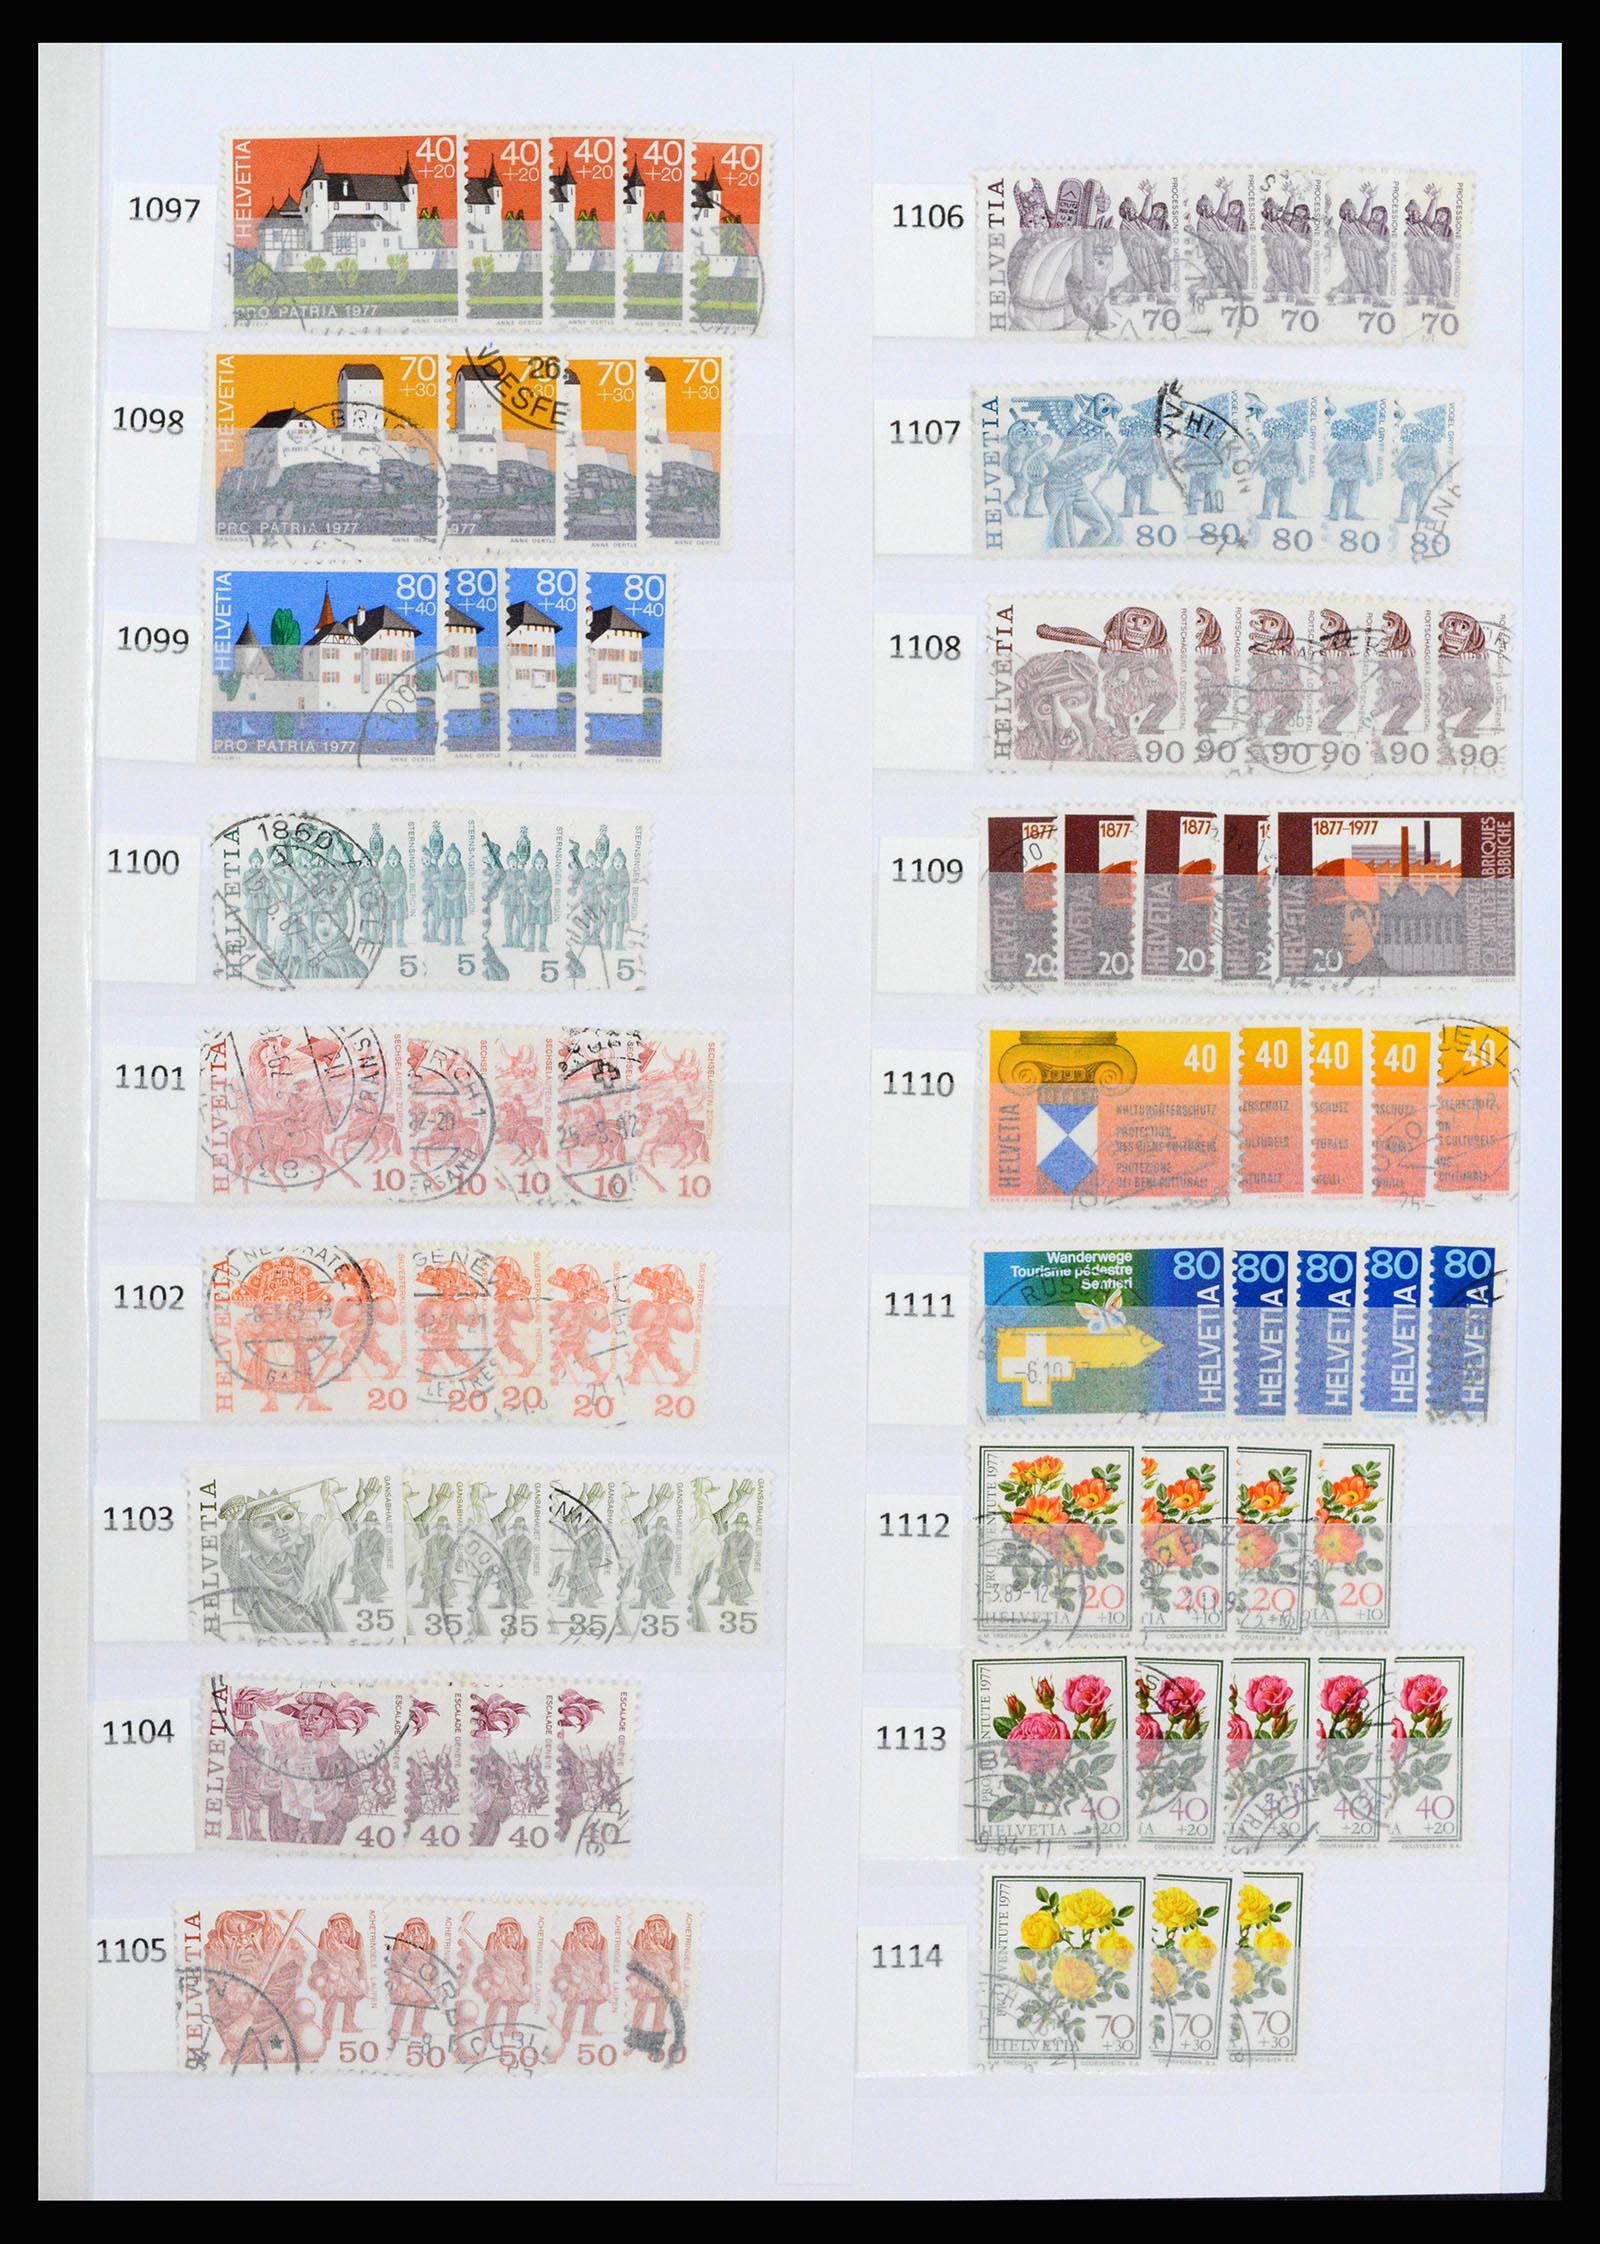 37252 062 - Stamp collection 37252 Switzerland 1900-2011.